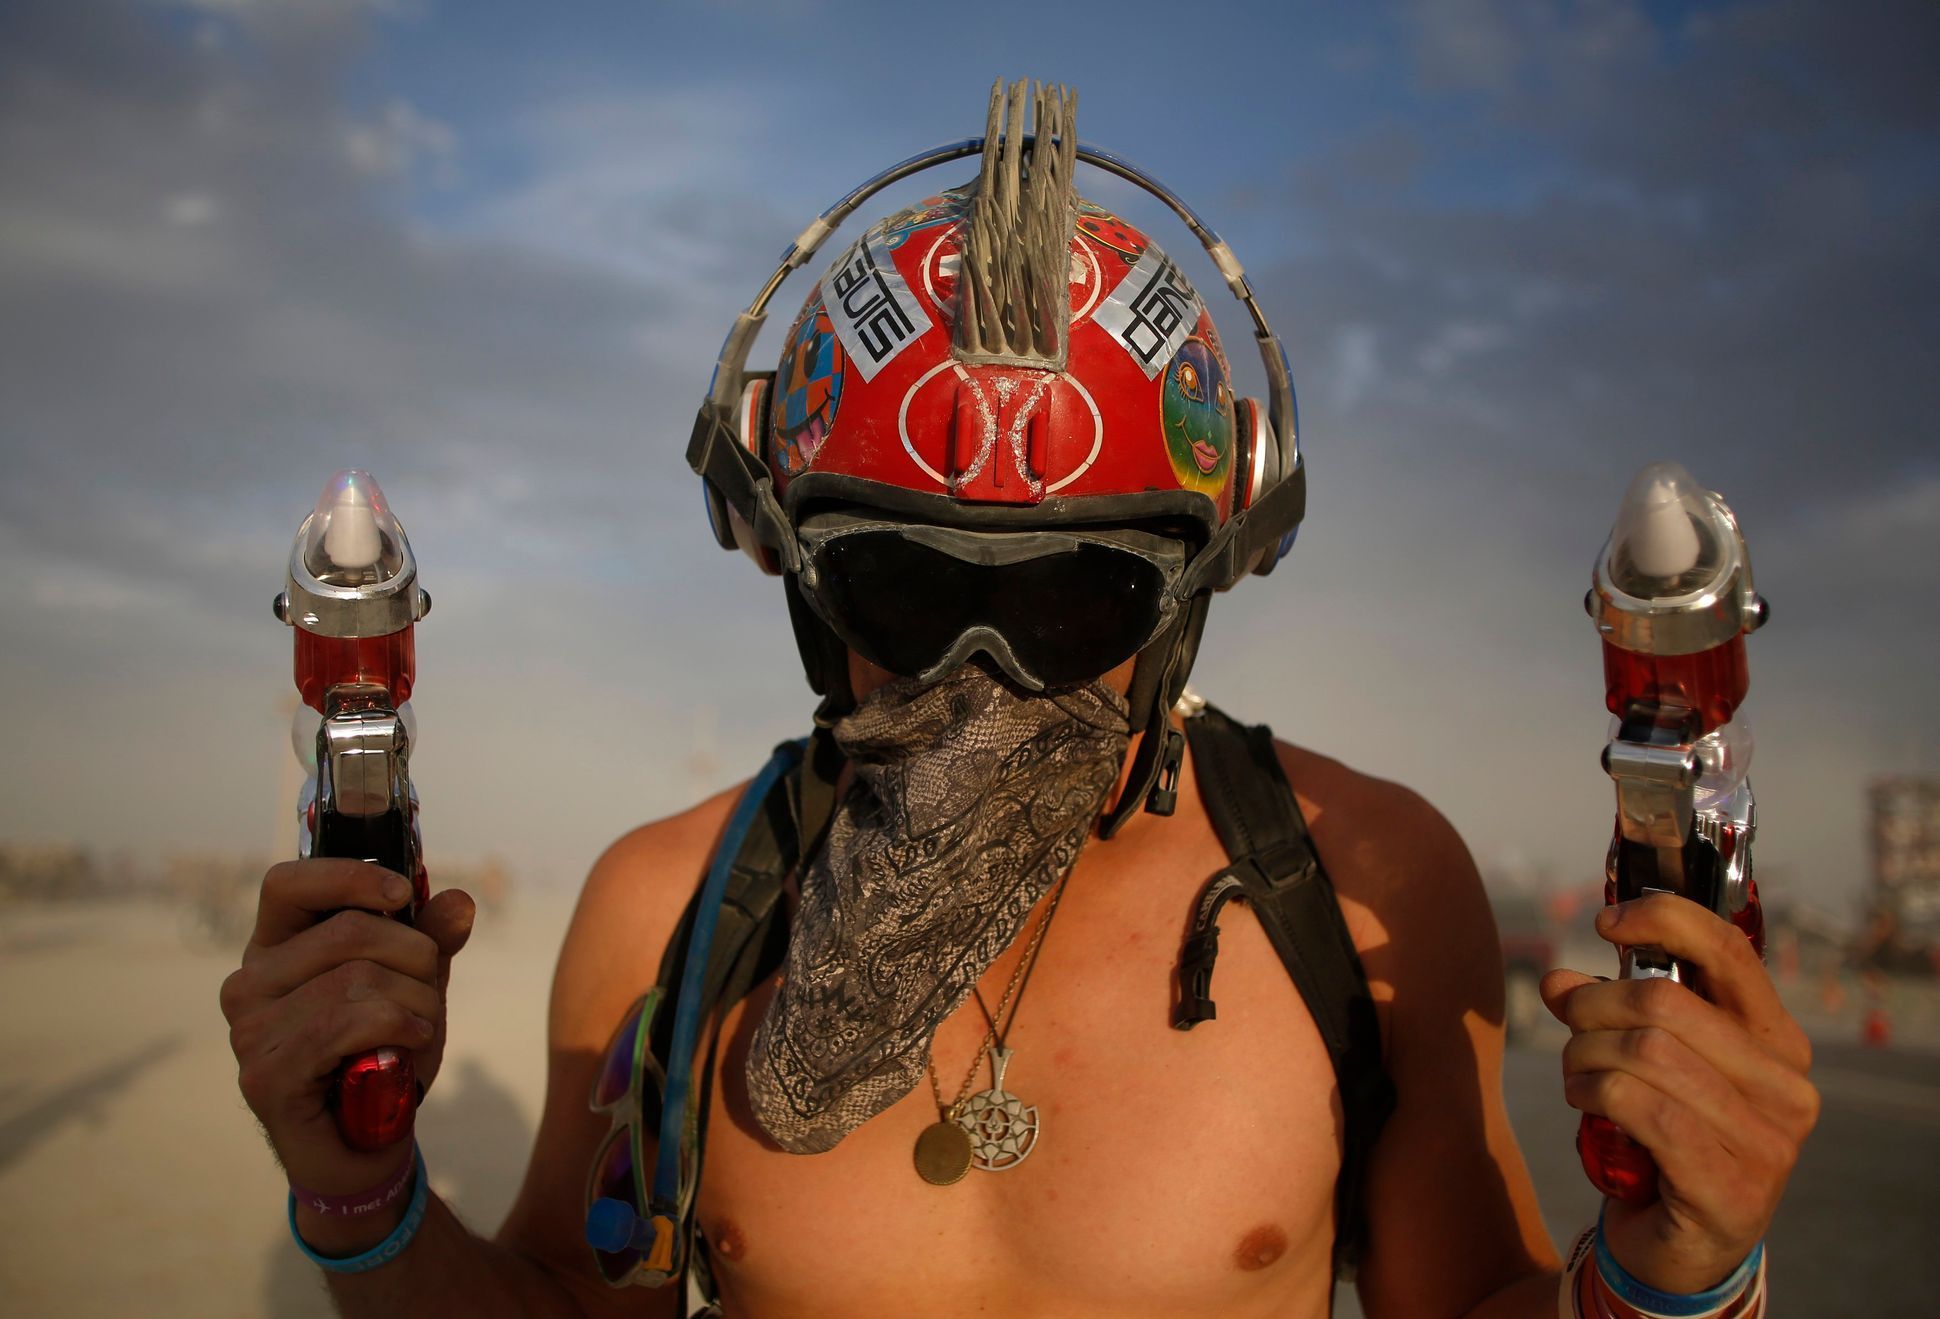 Dillon Bracken attends the Burning Man 2014 &quot;Caravansary&quot; arts and music festival in the Black Rock Desert of Nevada